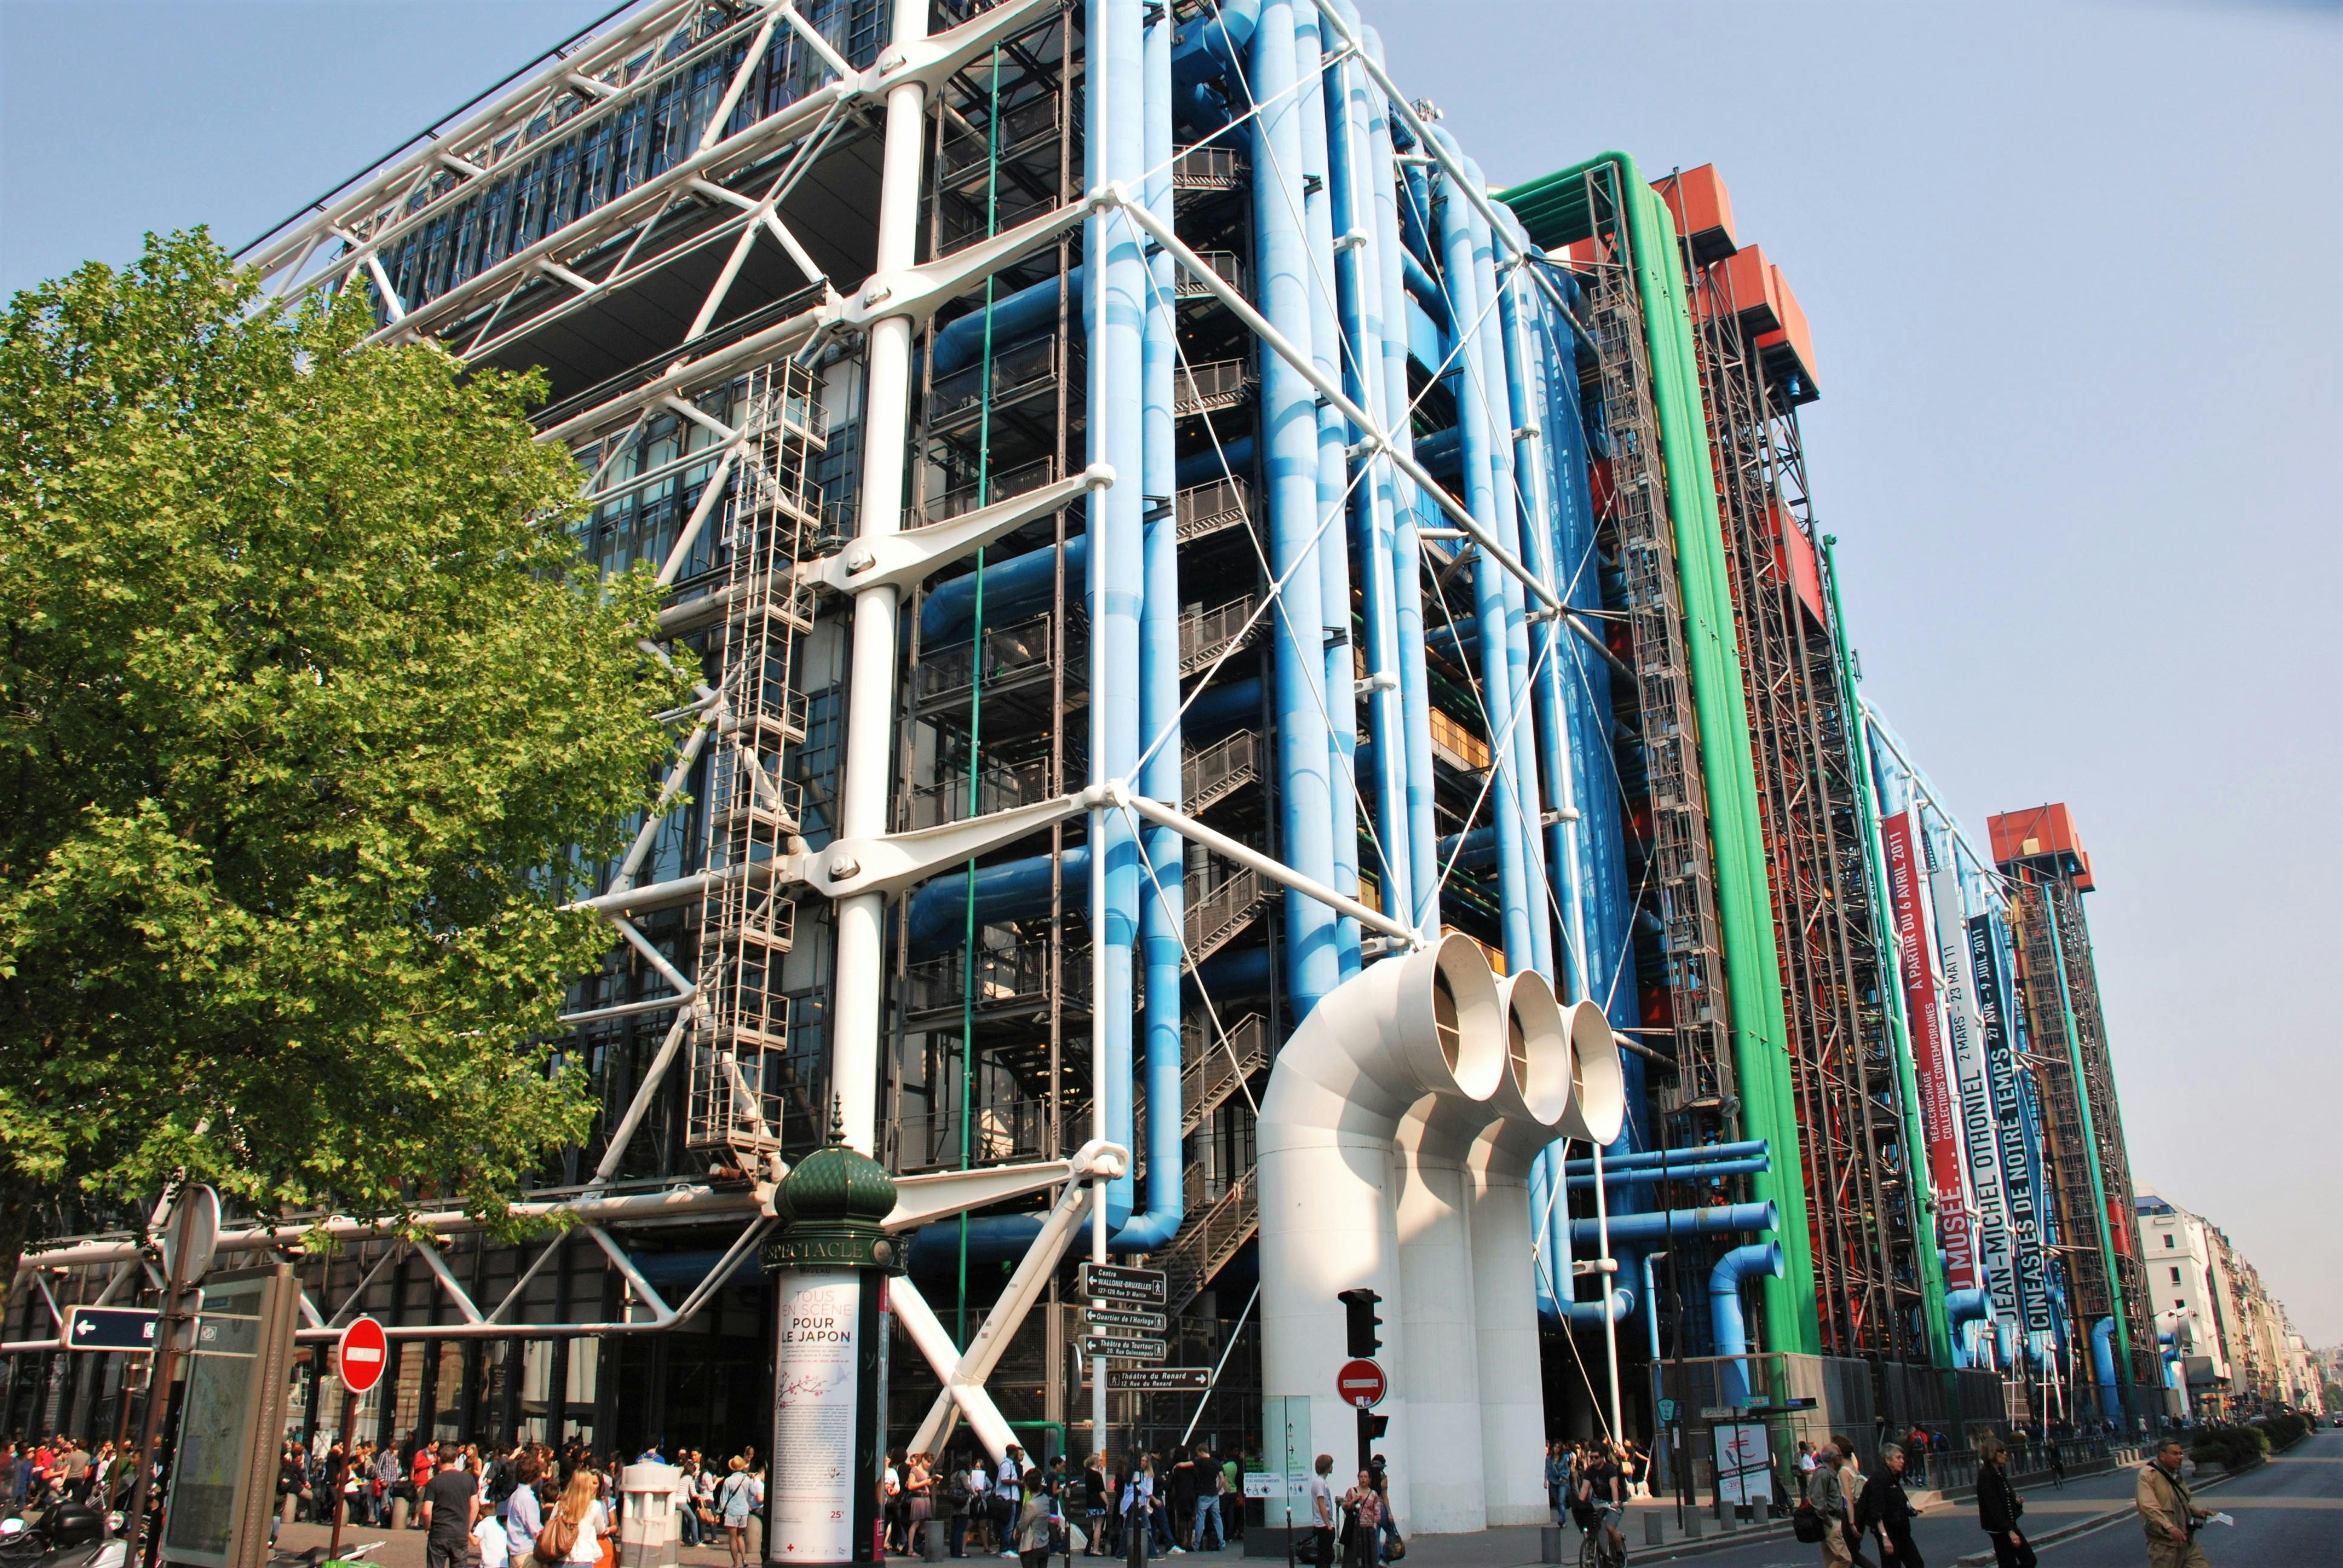 Tickets for the Centre Pompidou permanent collection boeken?